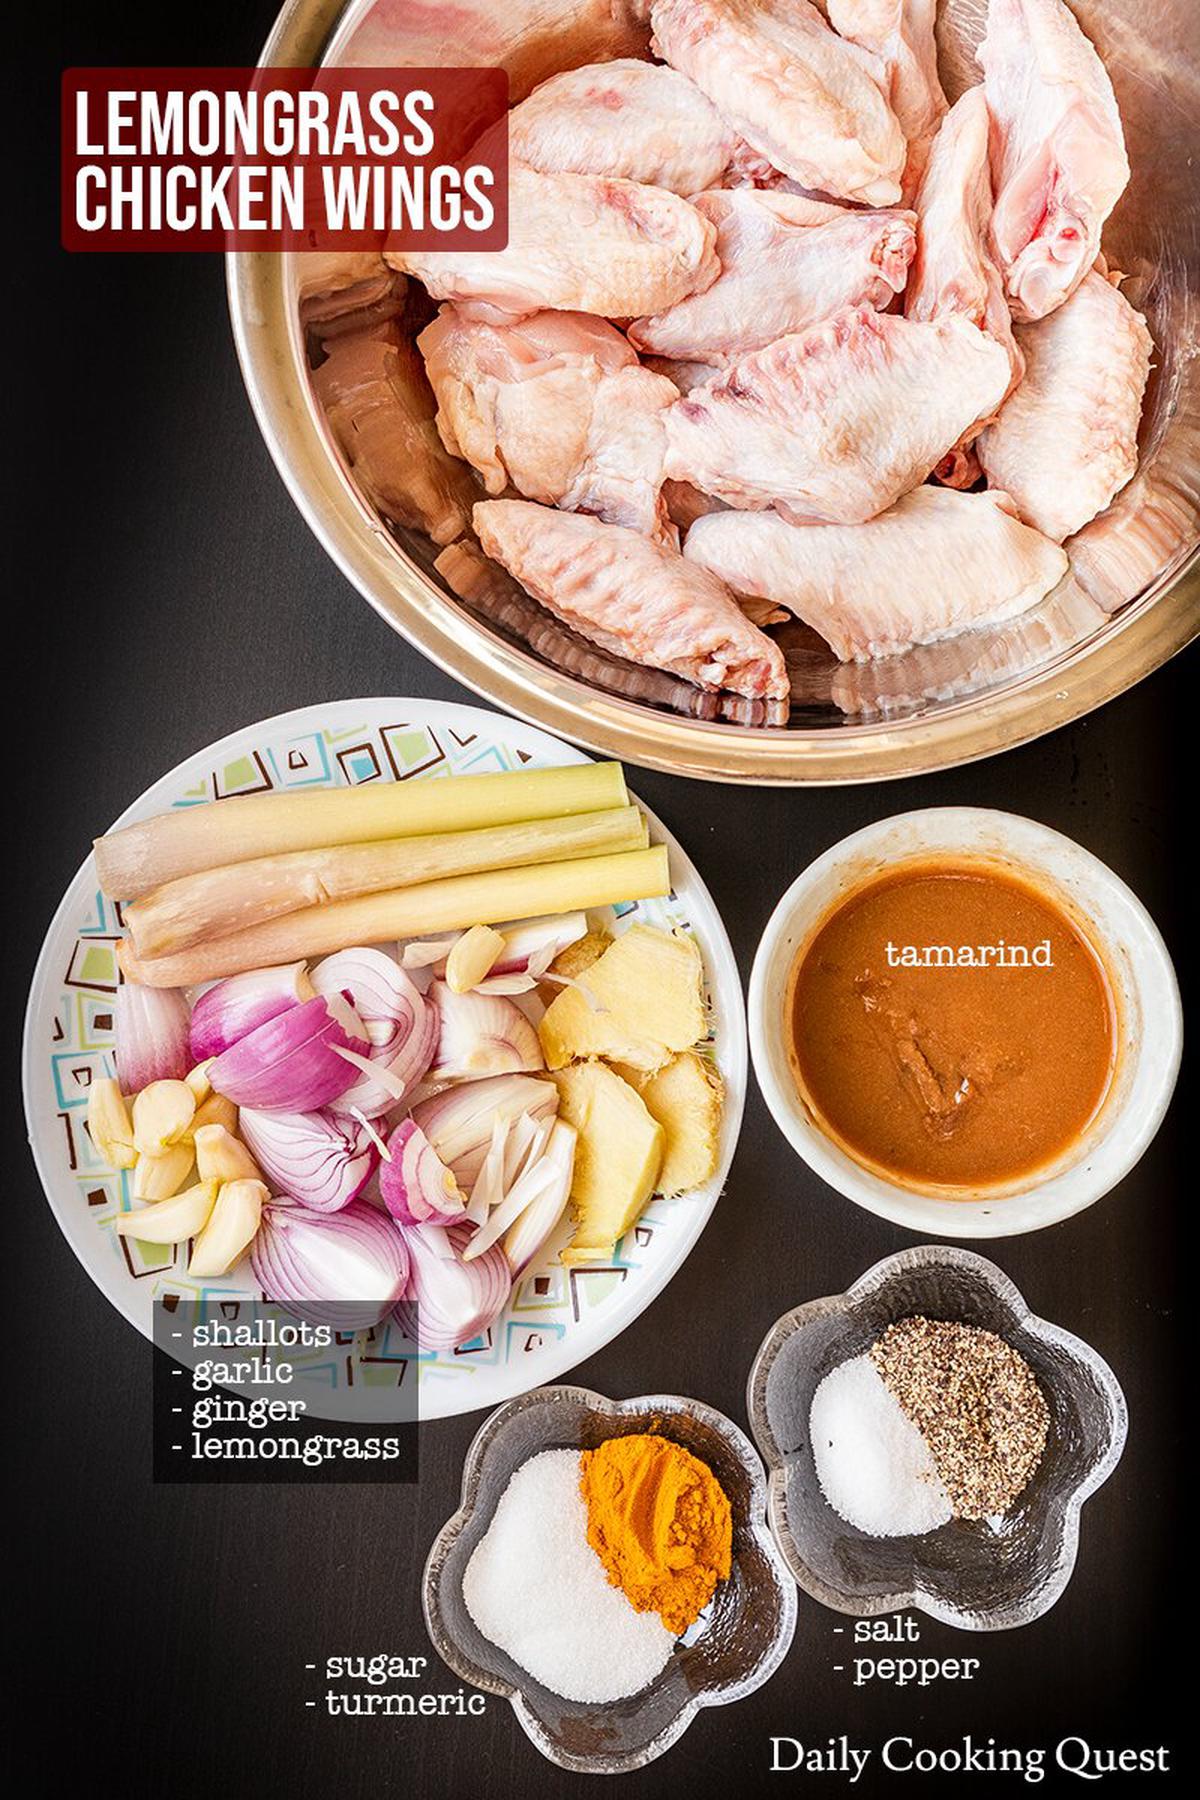 Ingredients to prepare Indonesian lemongrass chicken wings: chicken wings, shallots, garlic, ginger, lemongrass, tamarind, turmeric, salt, sugar, and pepper.